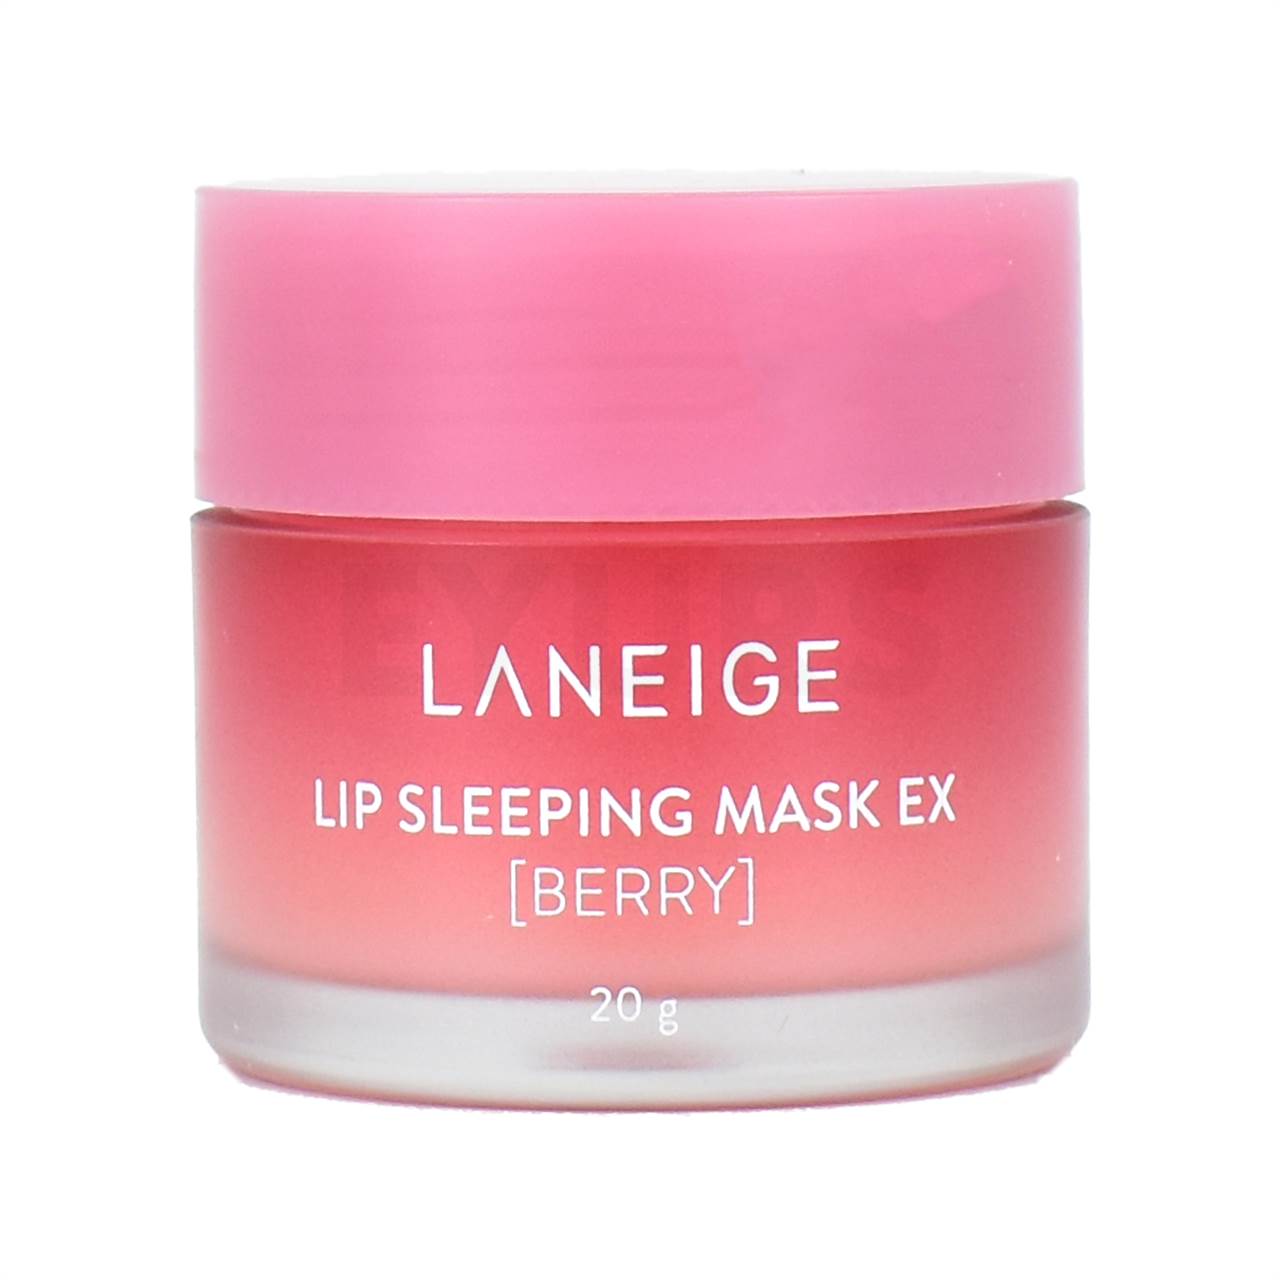 laneige lip sleeping mask berry ex 20g